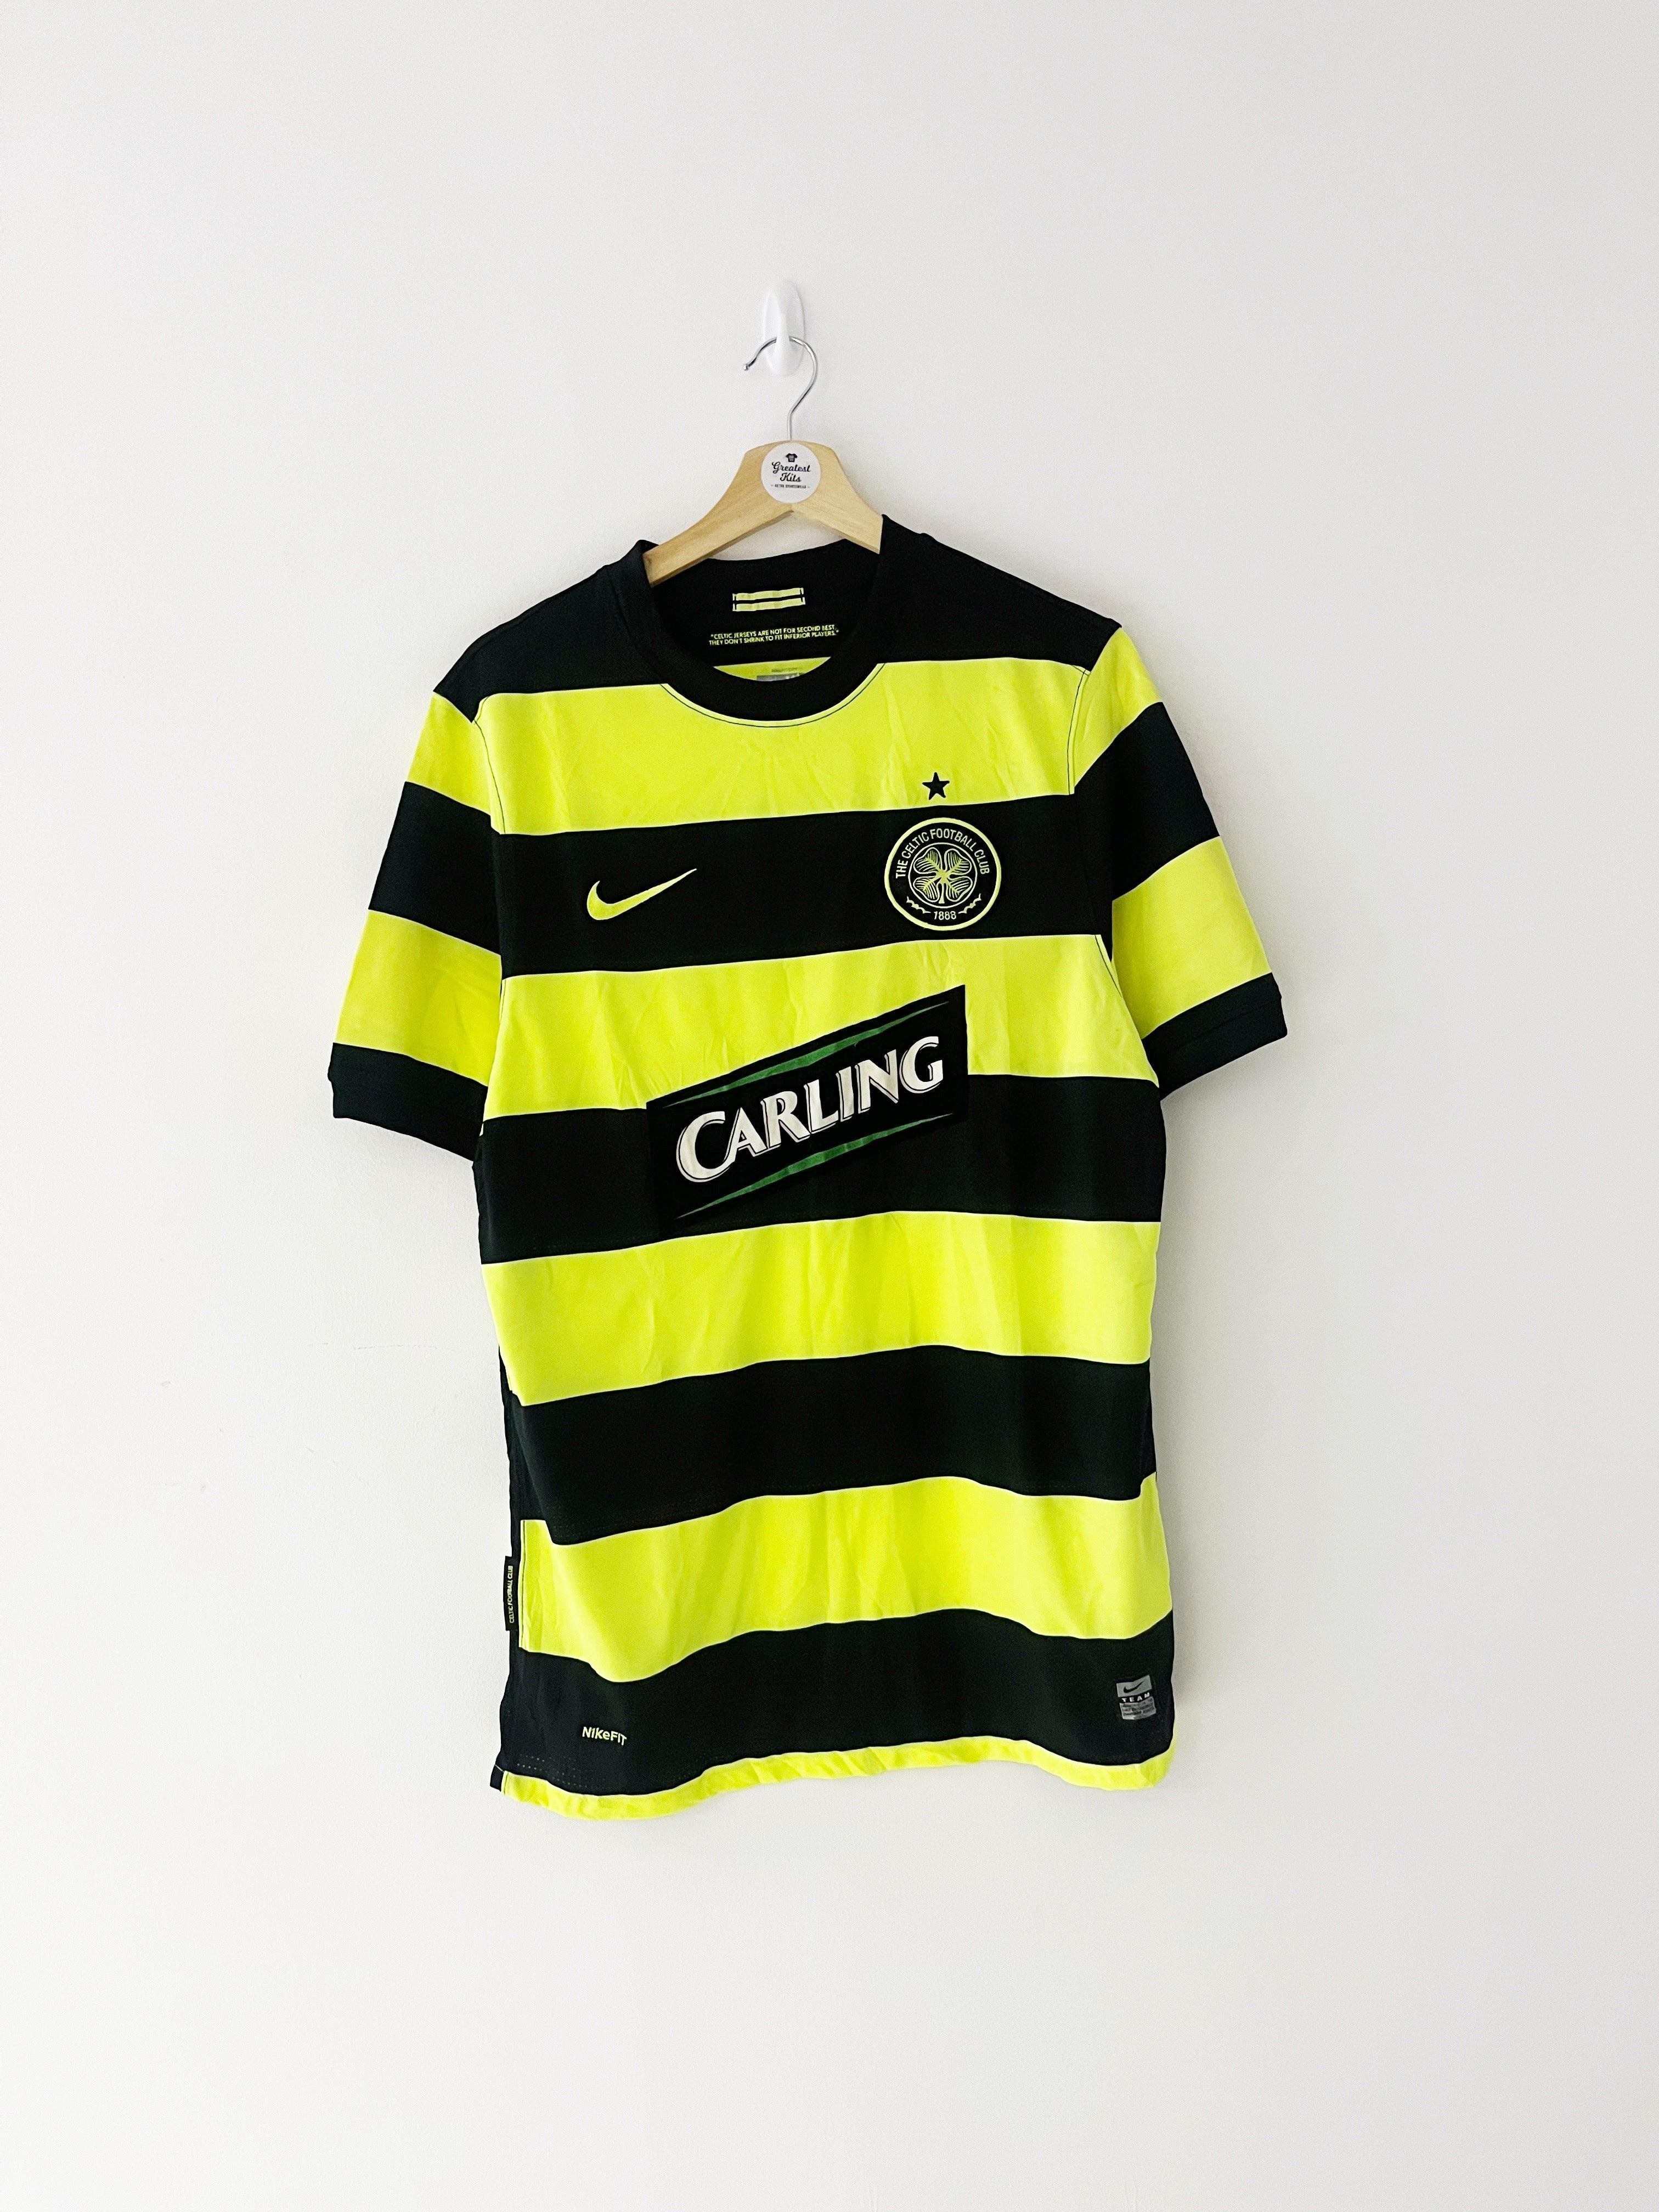 2009/11 Celtic Away Shirt (M) 8.5/10